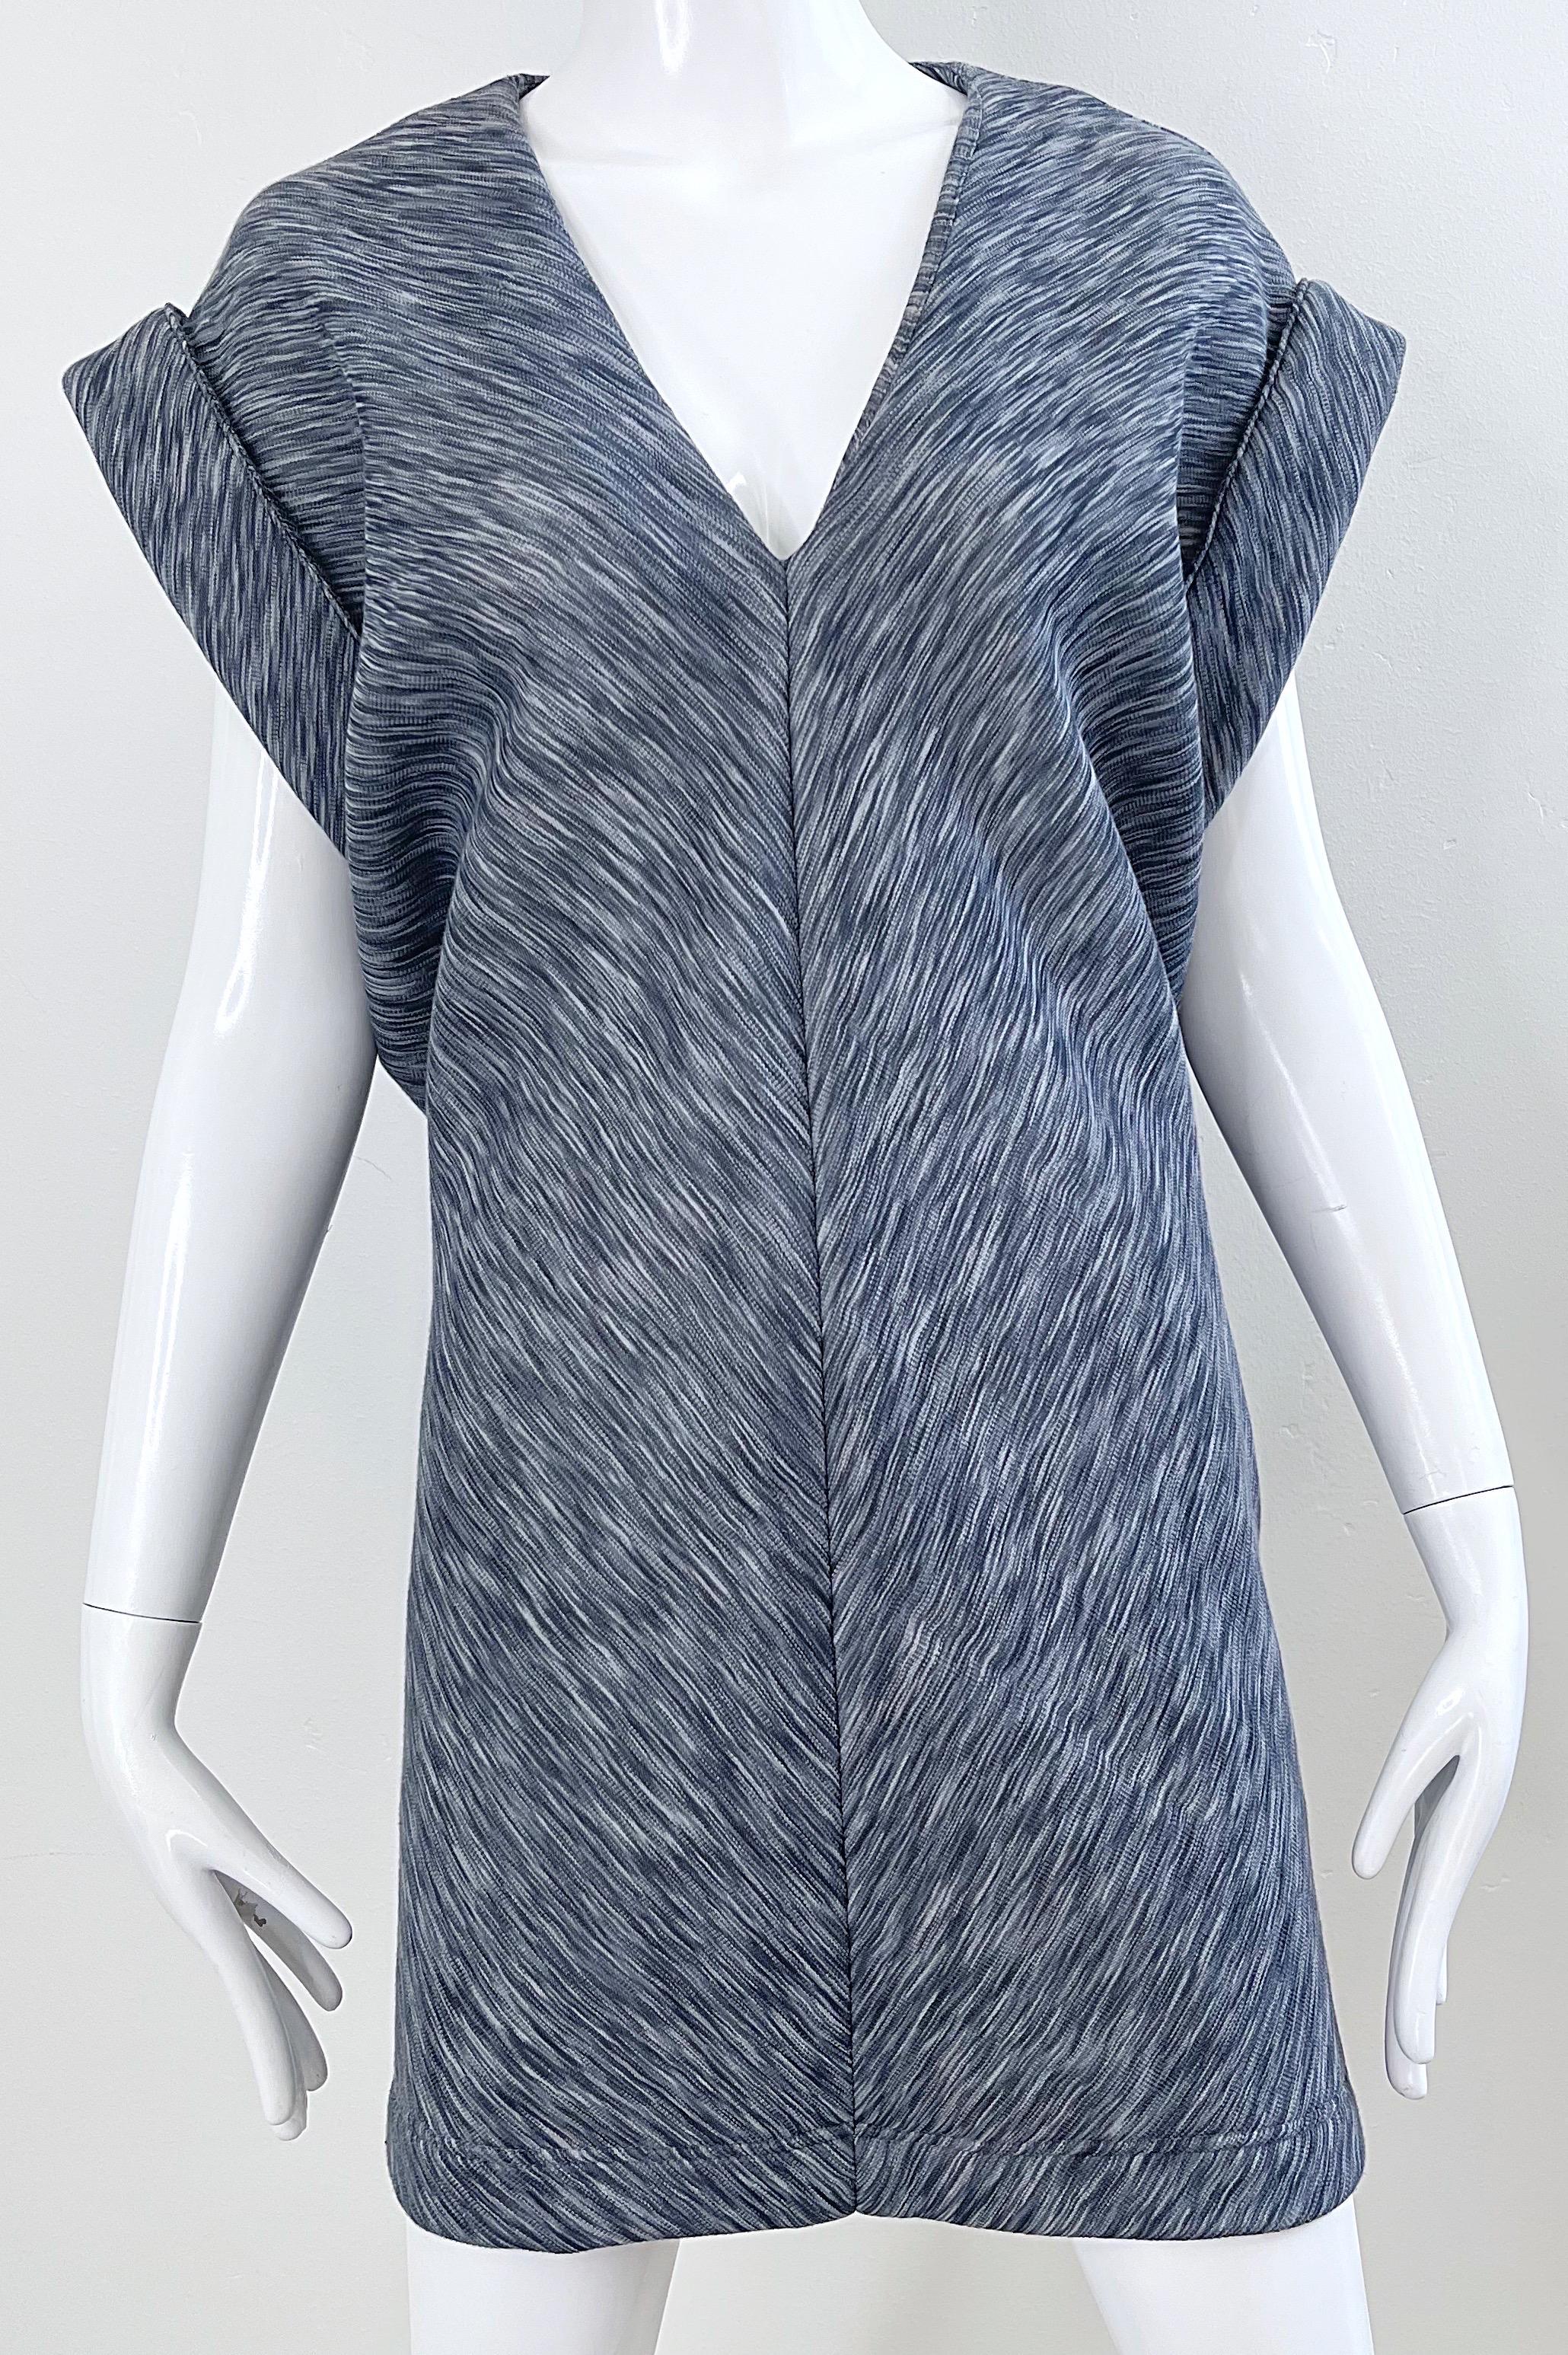 Balenciaga by Nicolas Ghesquiere Heather Grey Size 40 / 10 Sweatshirt Mini Dress For Sale 4